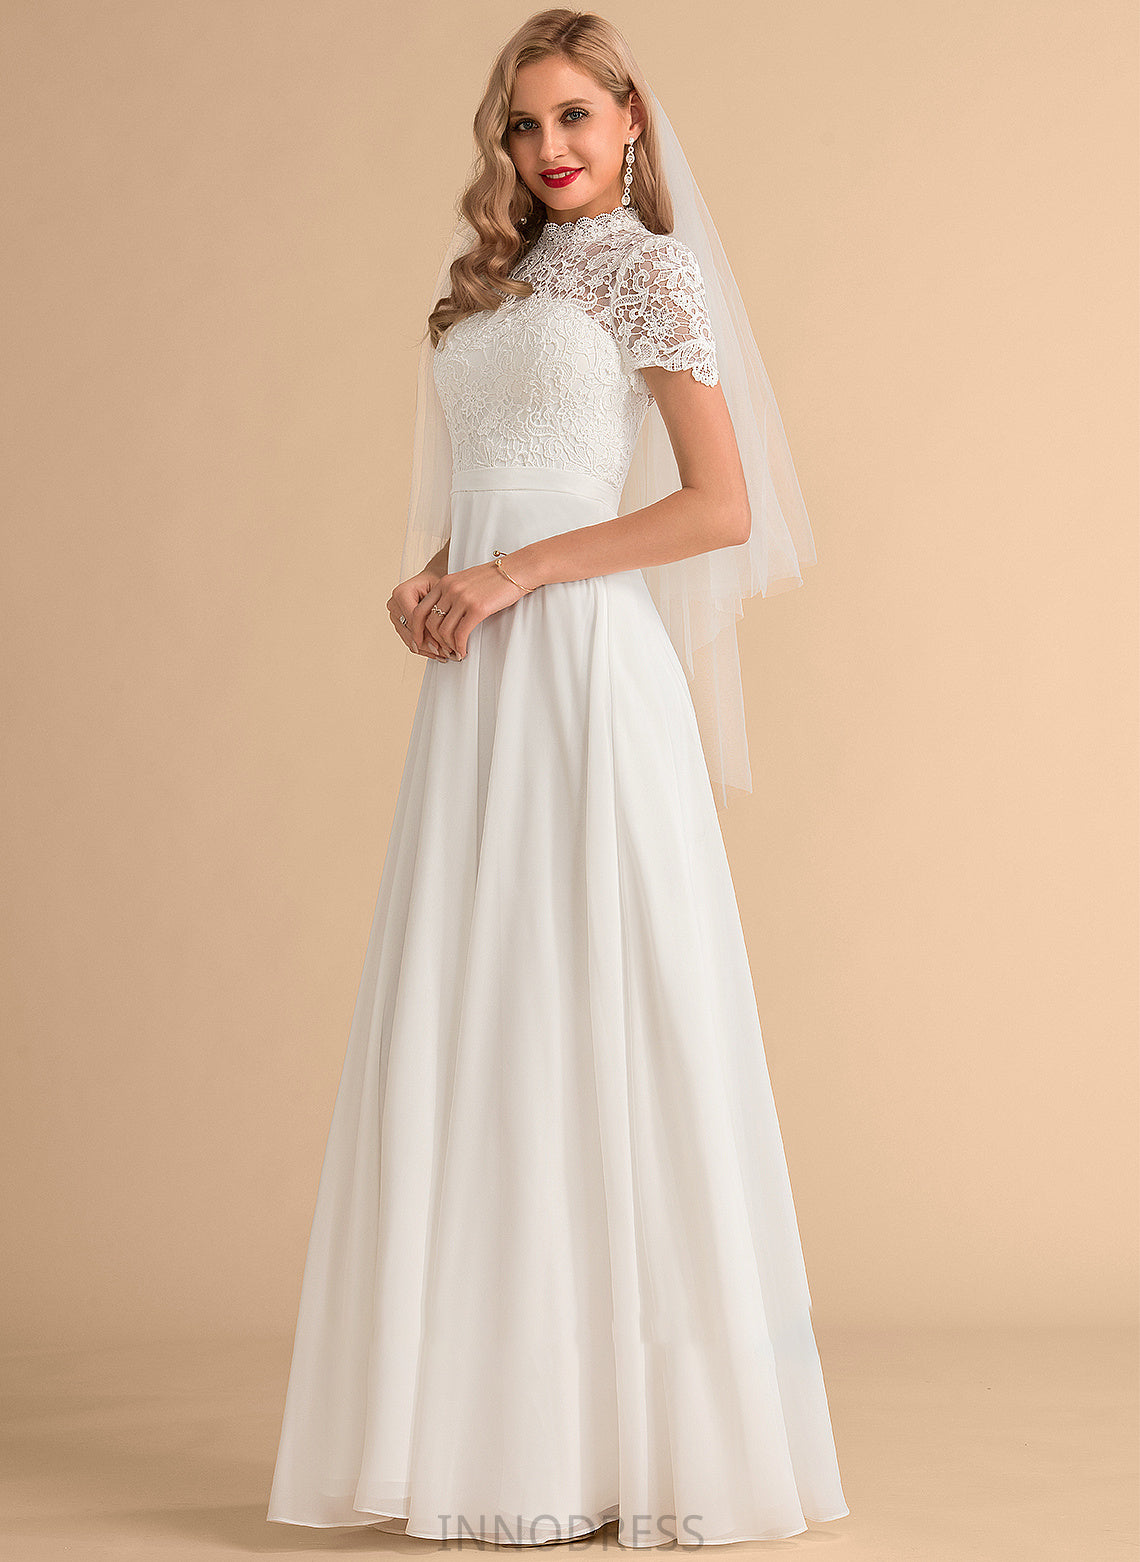 Lace High Wedding Dress Wedding Dresses Floor-Length Gianna Neck Chiffon A-Line